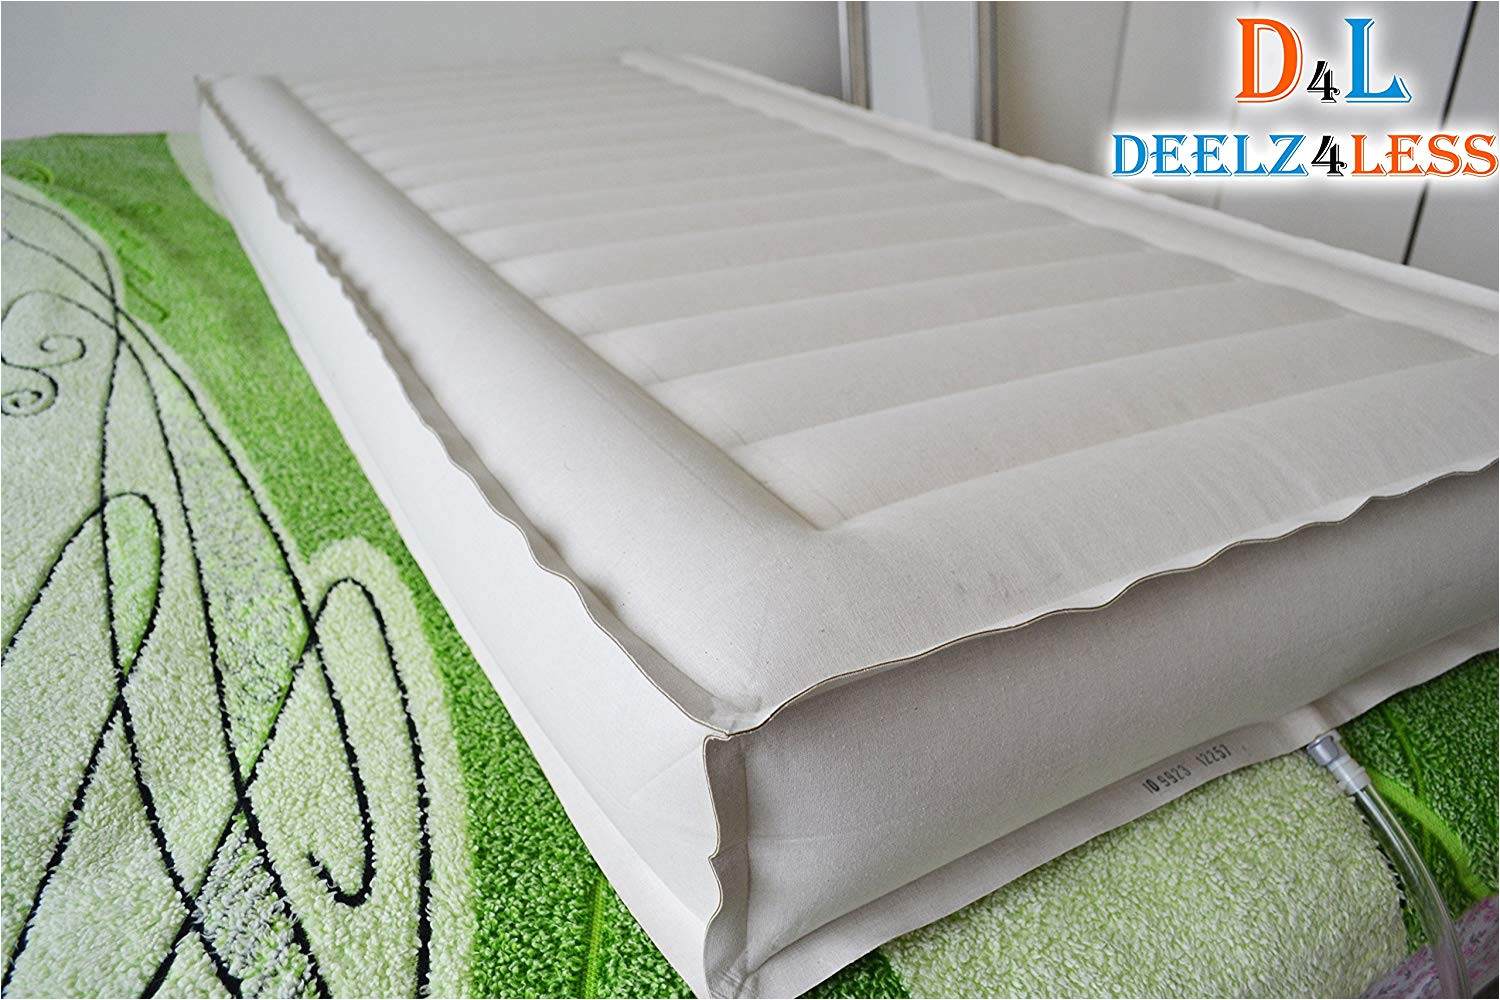 are sleep number mattresses toxic